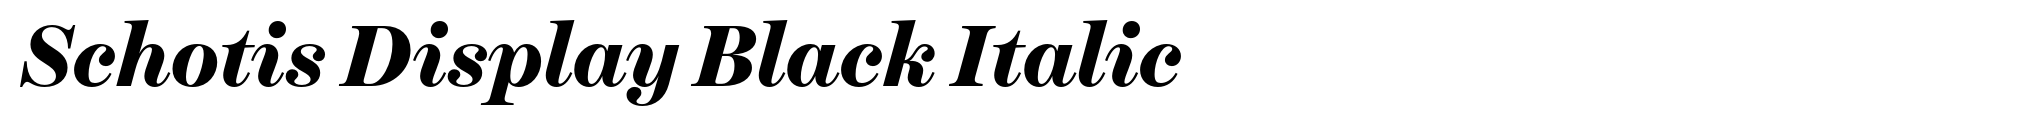 Schotis Display Black Italic image